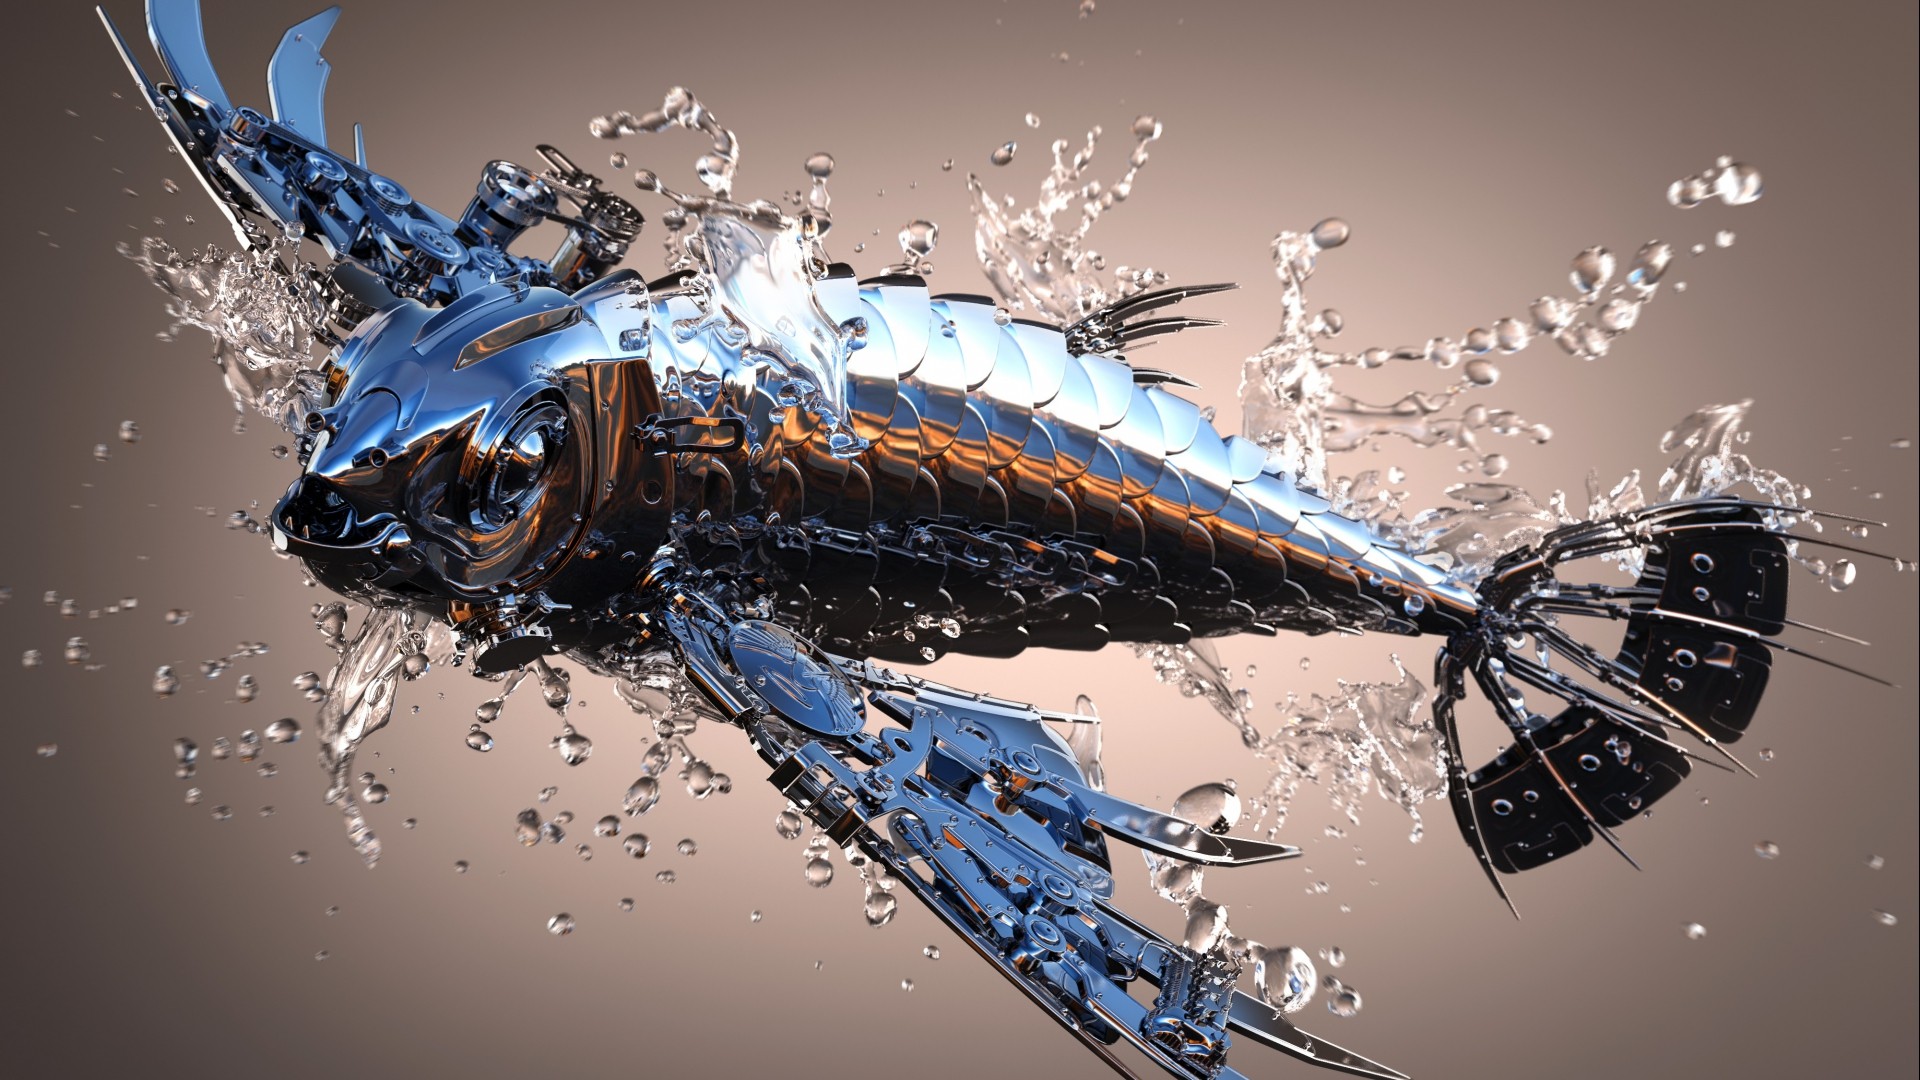 General 1920x1080 digital art animals CGI splashes metal water drops simple background fish flying reflection